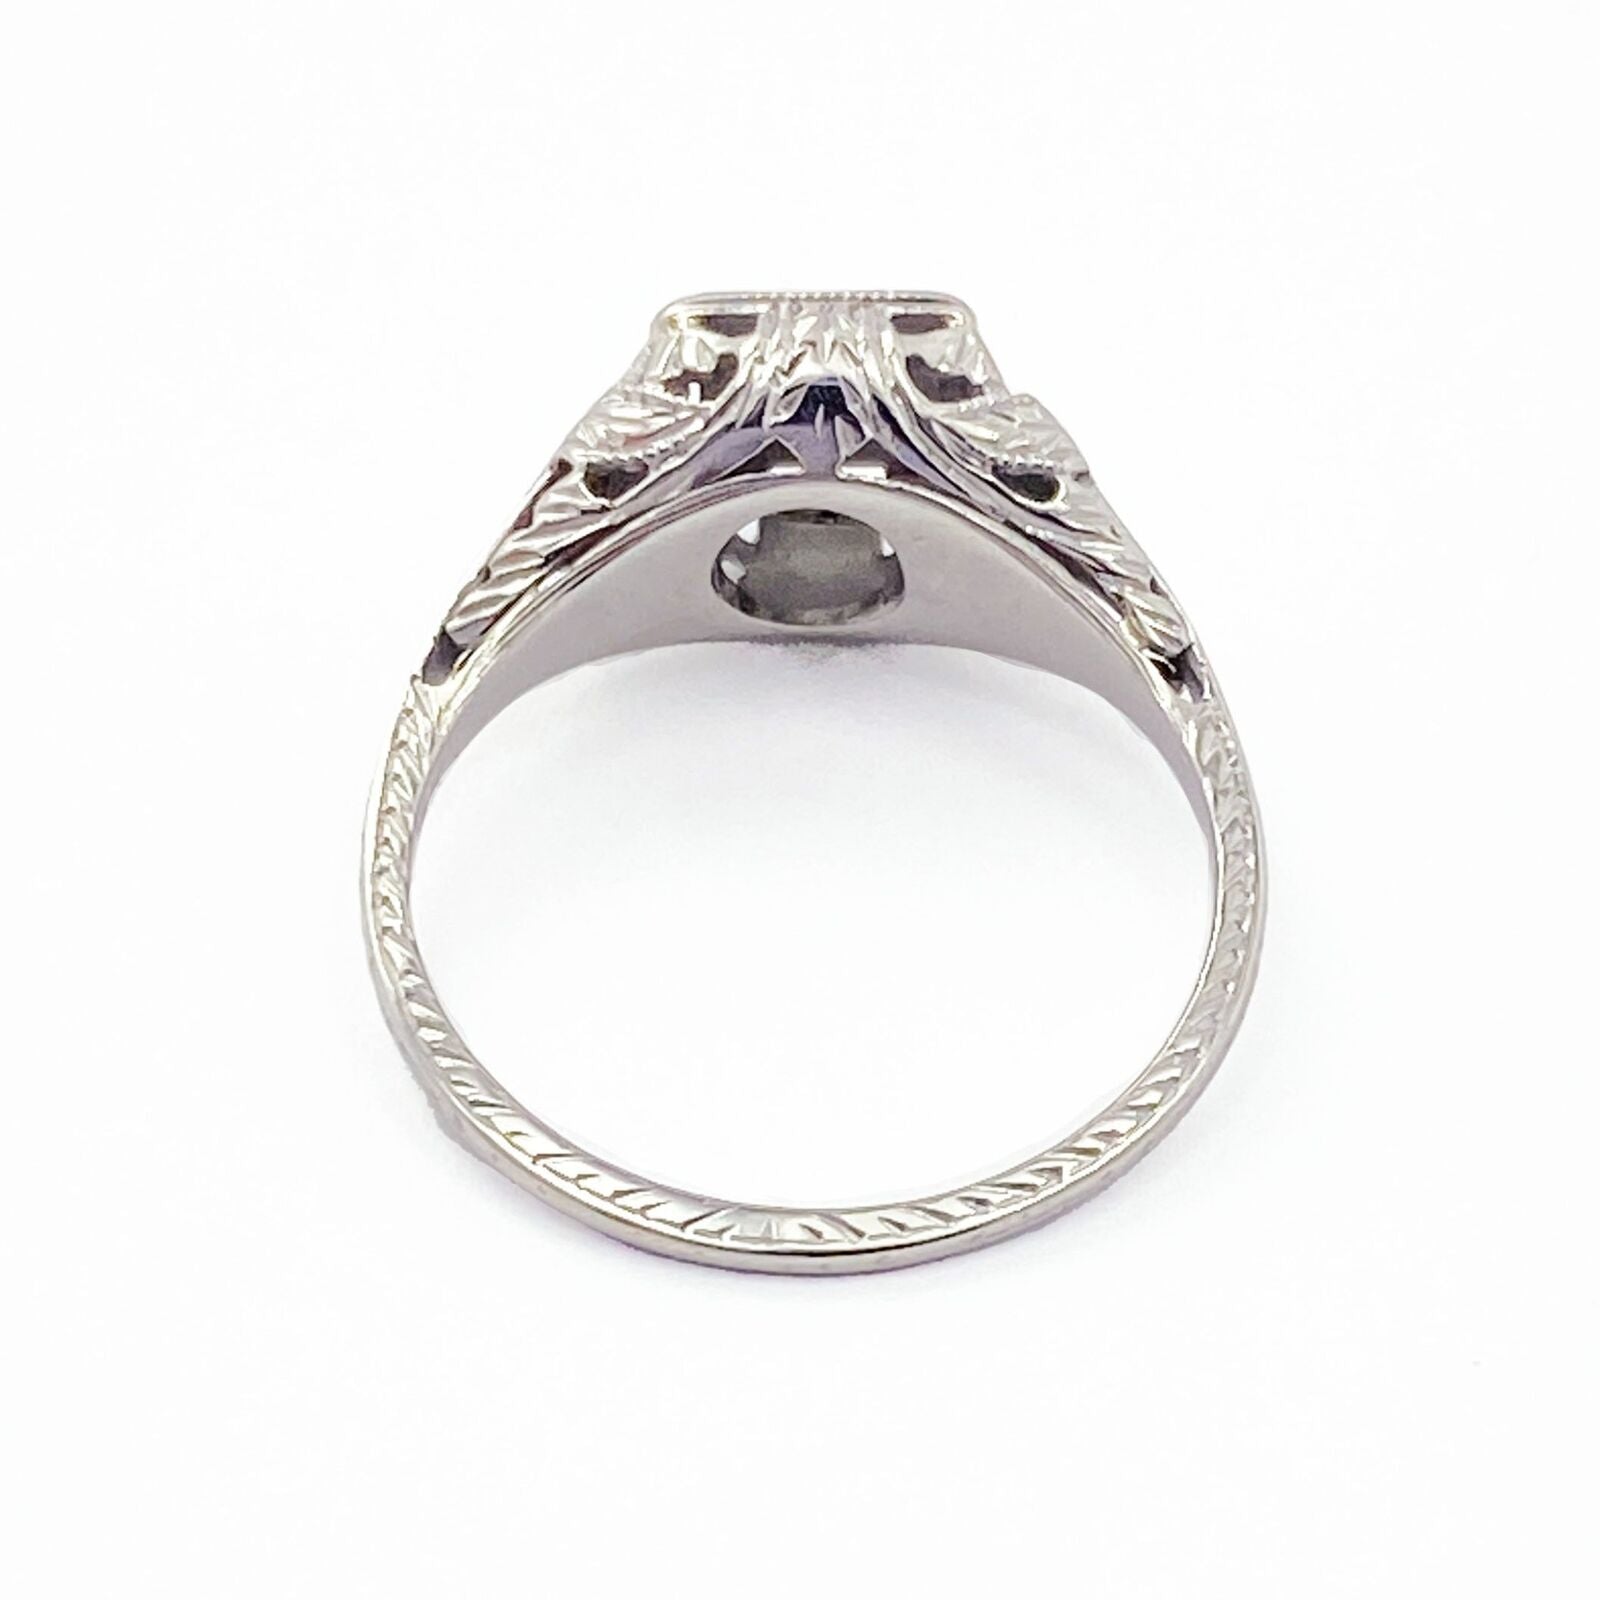 Four-Prong Square Halo 0.45 TCW Princess Cut Diamond Art-Deco Milgrain  Filigree Bridal Ring Set in 10K White Gold 